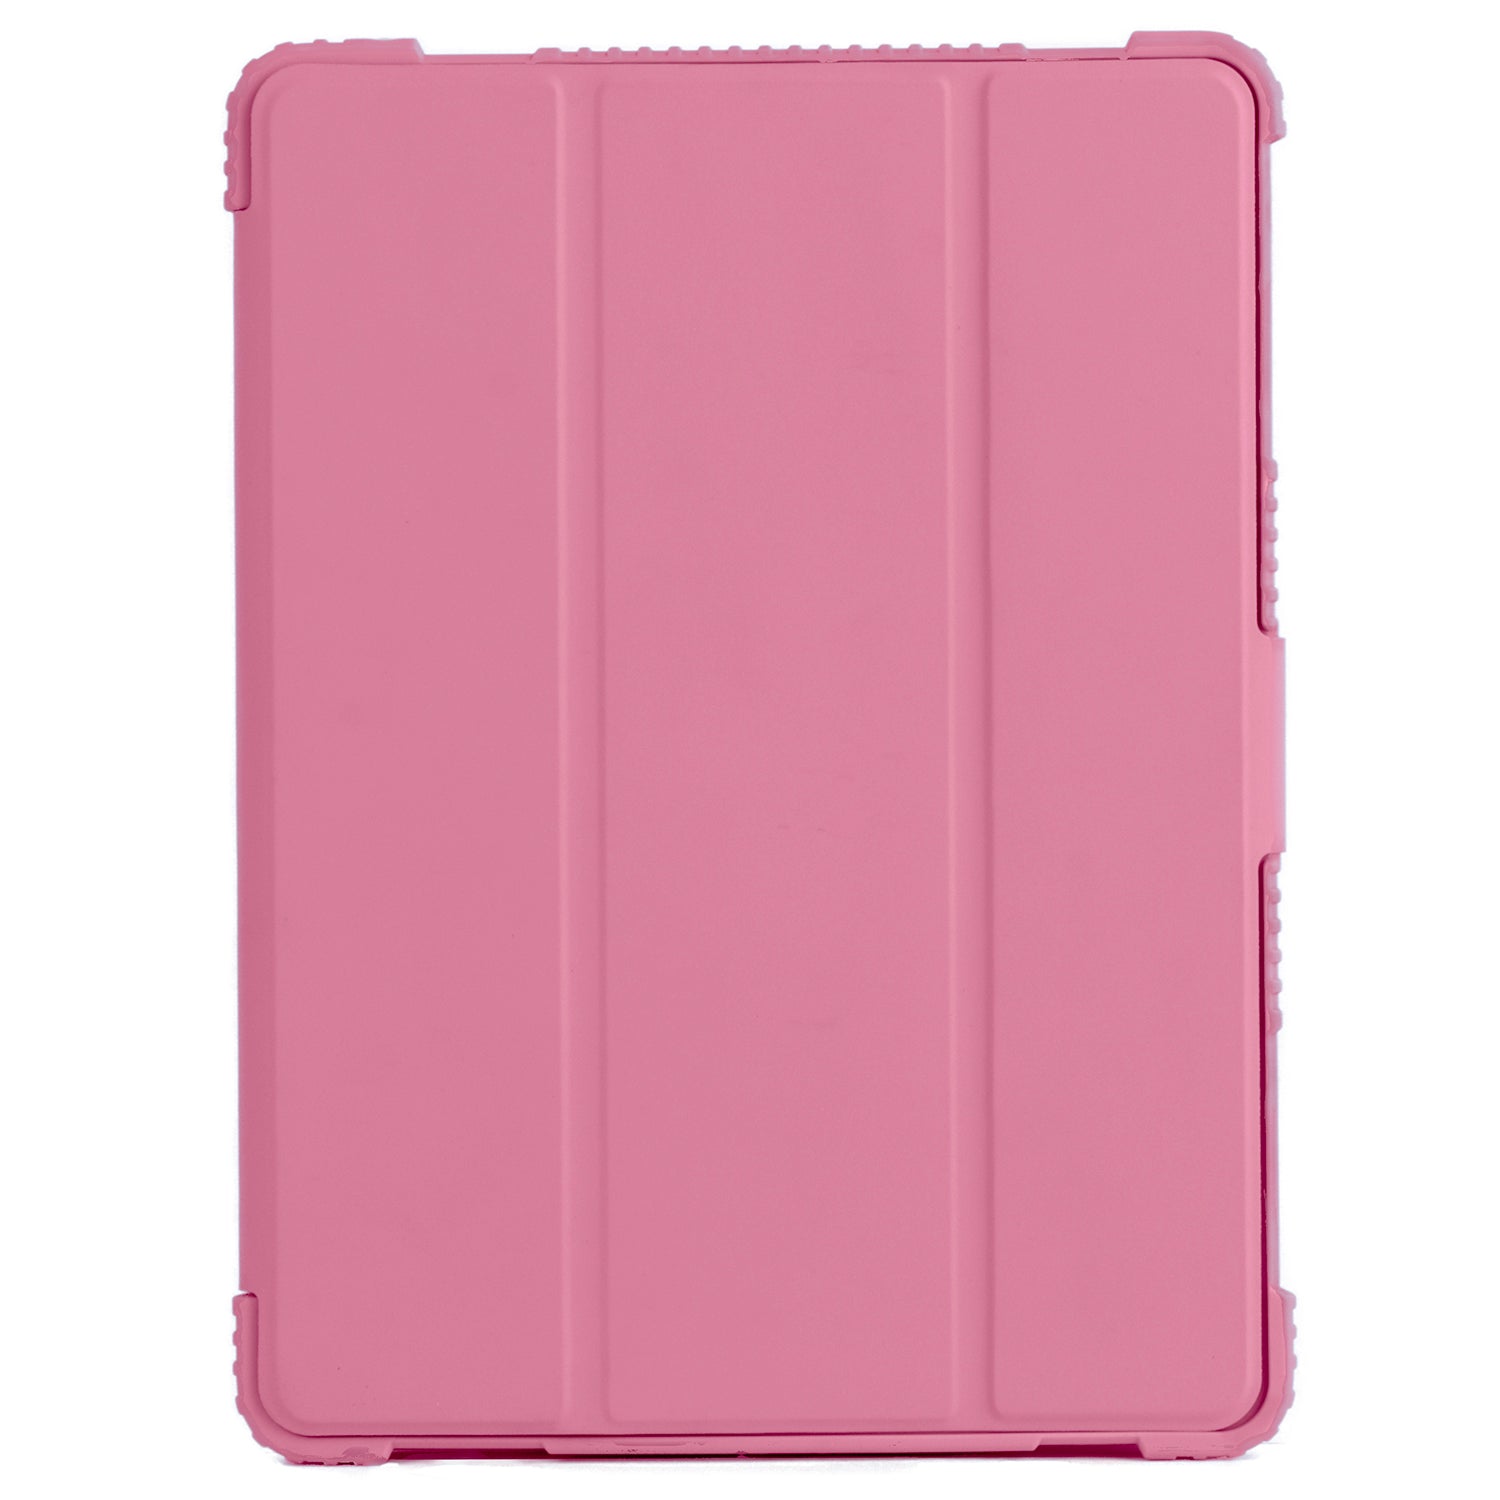 TechXtras Shock Absorbent 10.2" Tablet Case - Pink